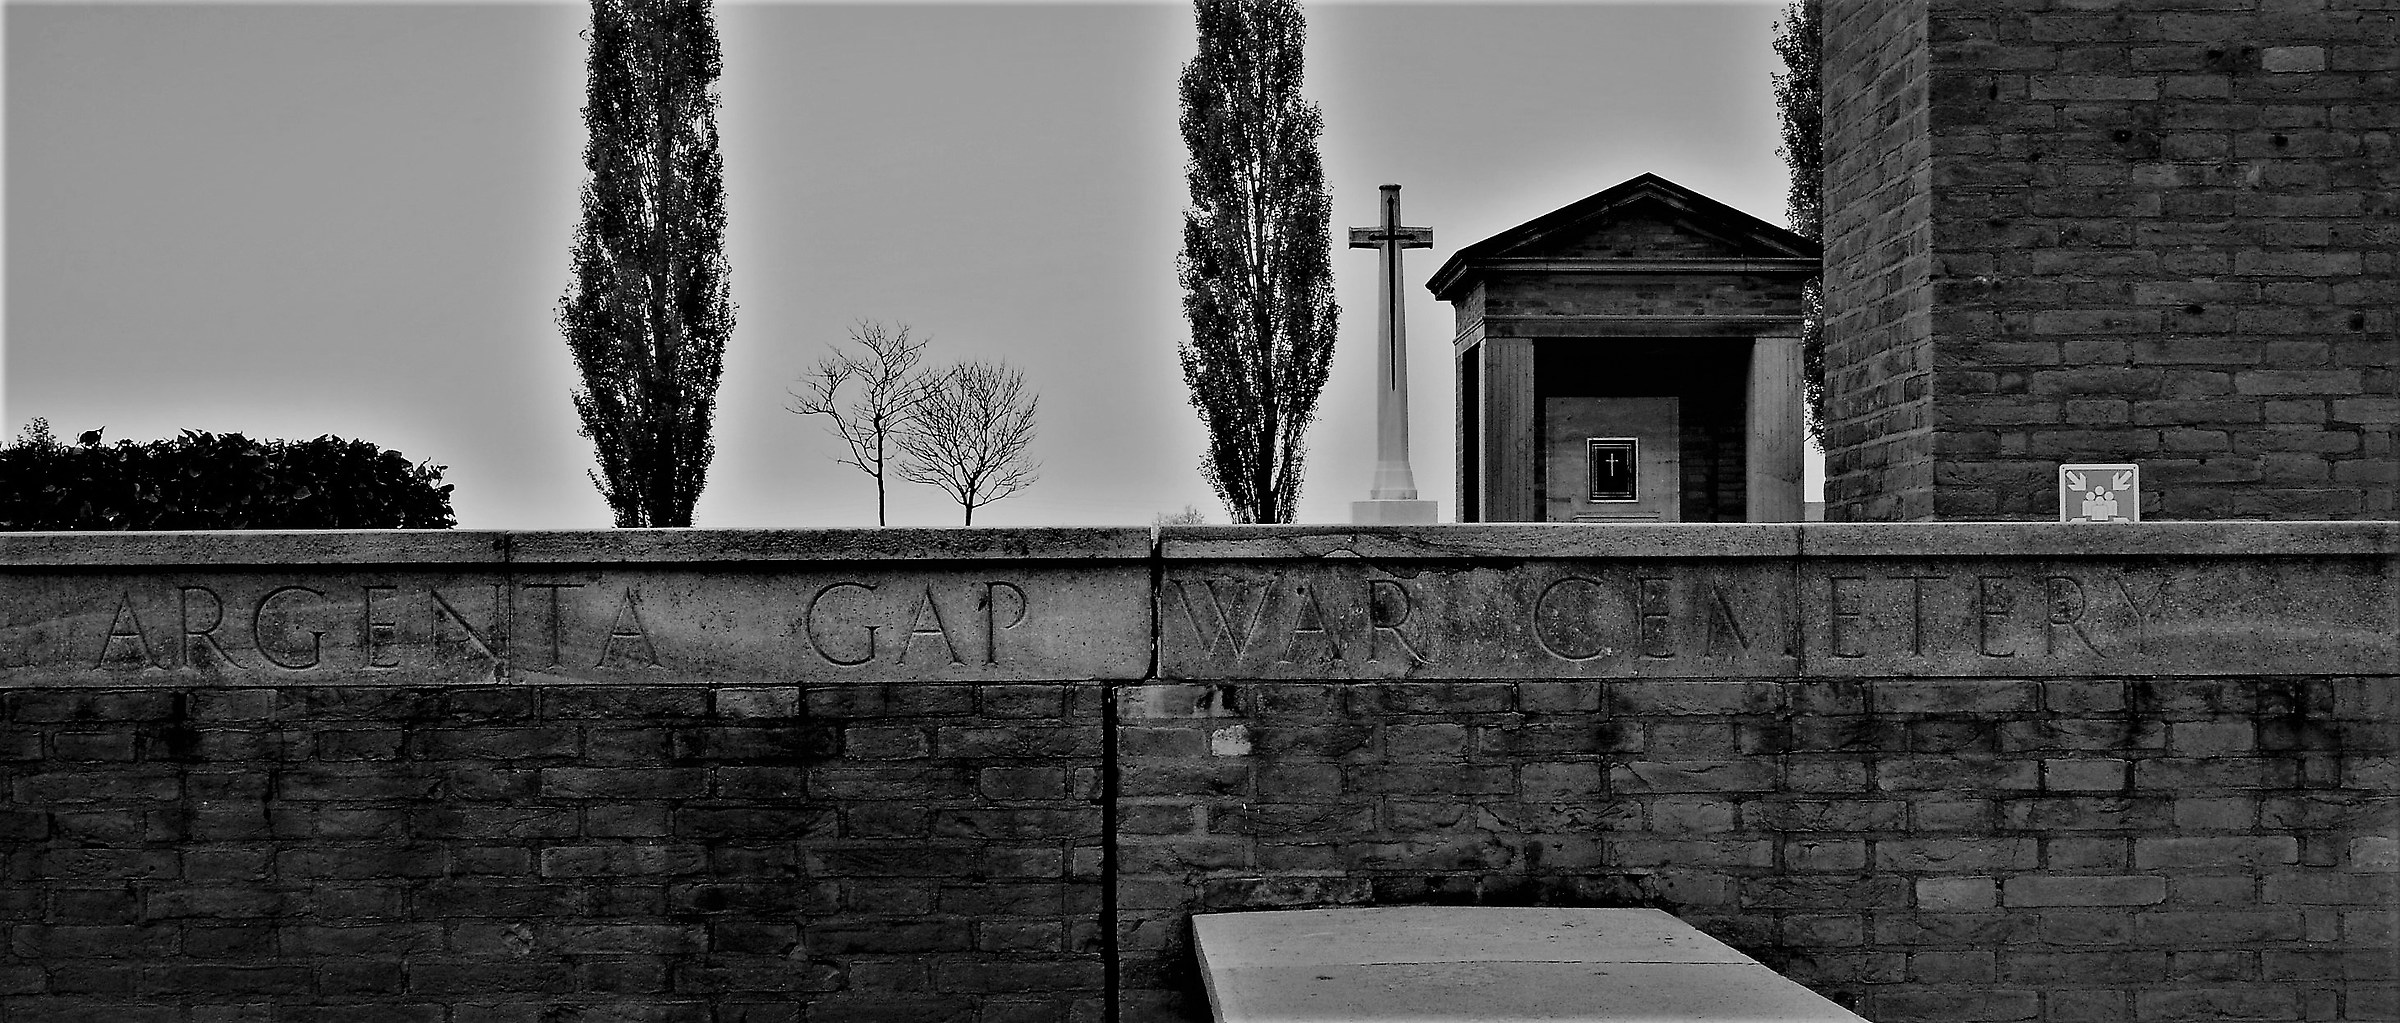 GAP WAR cemetery...